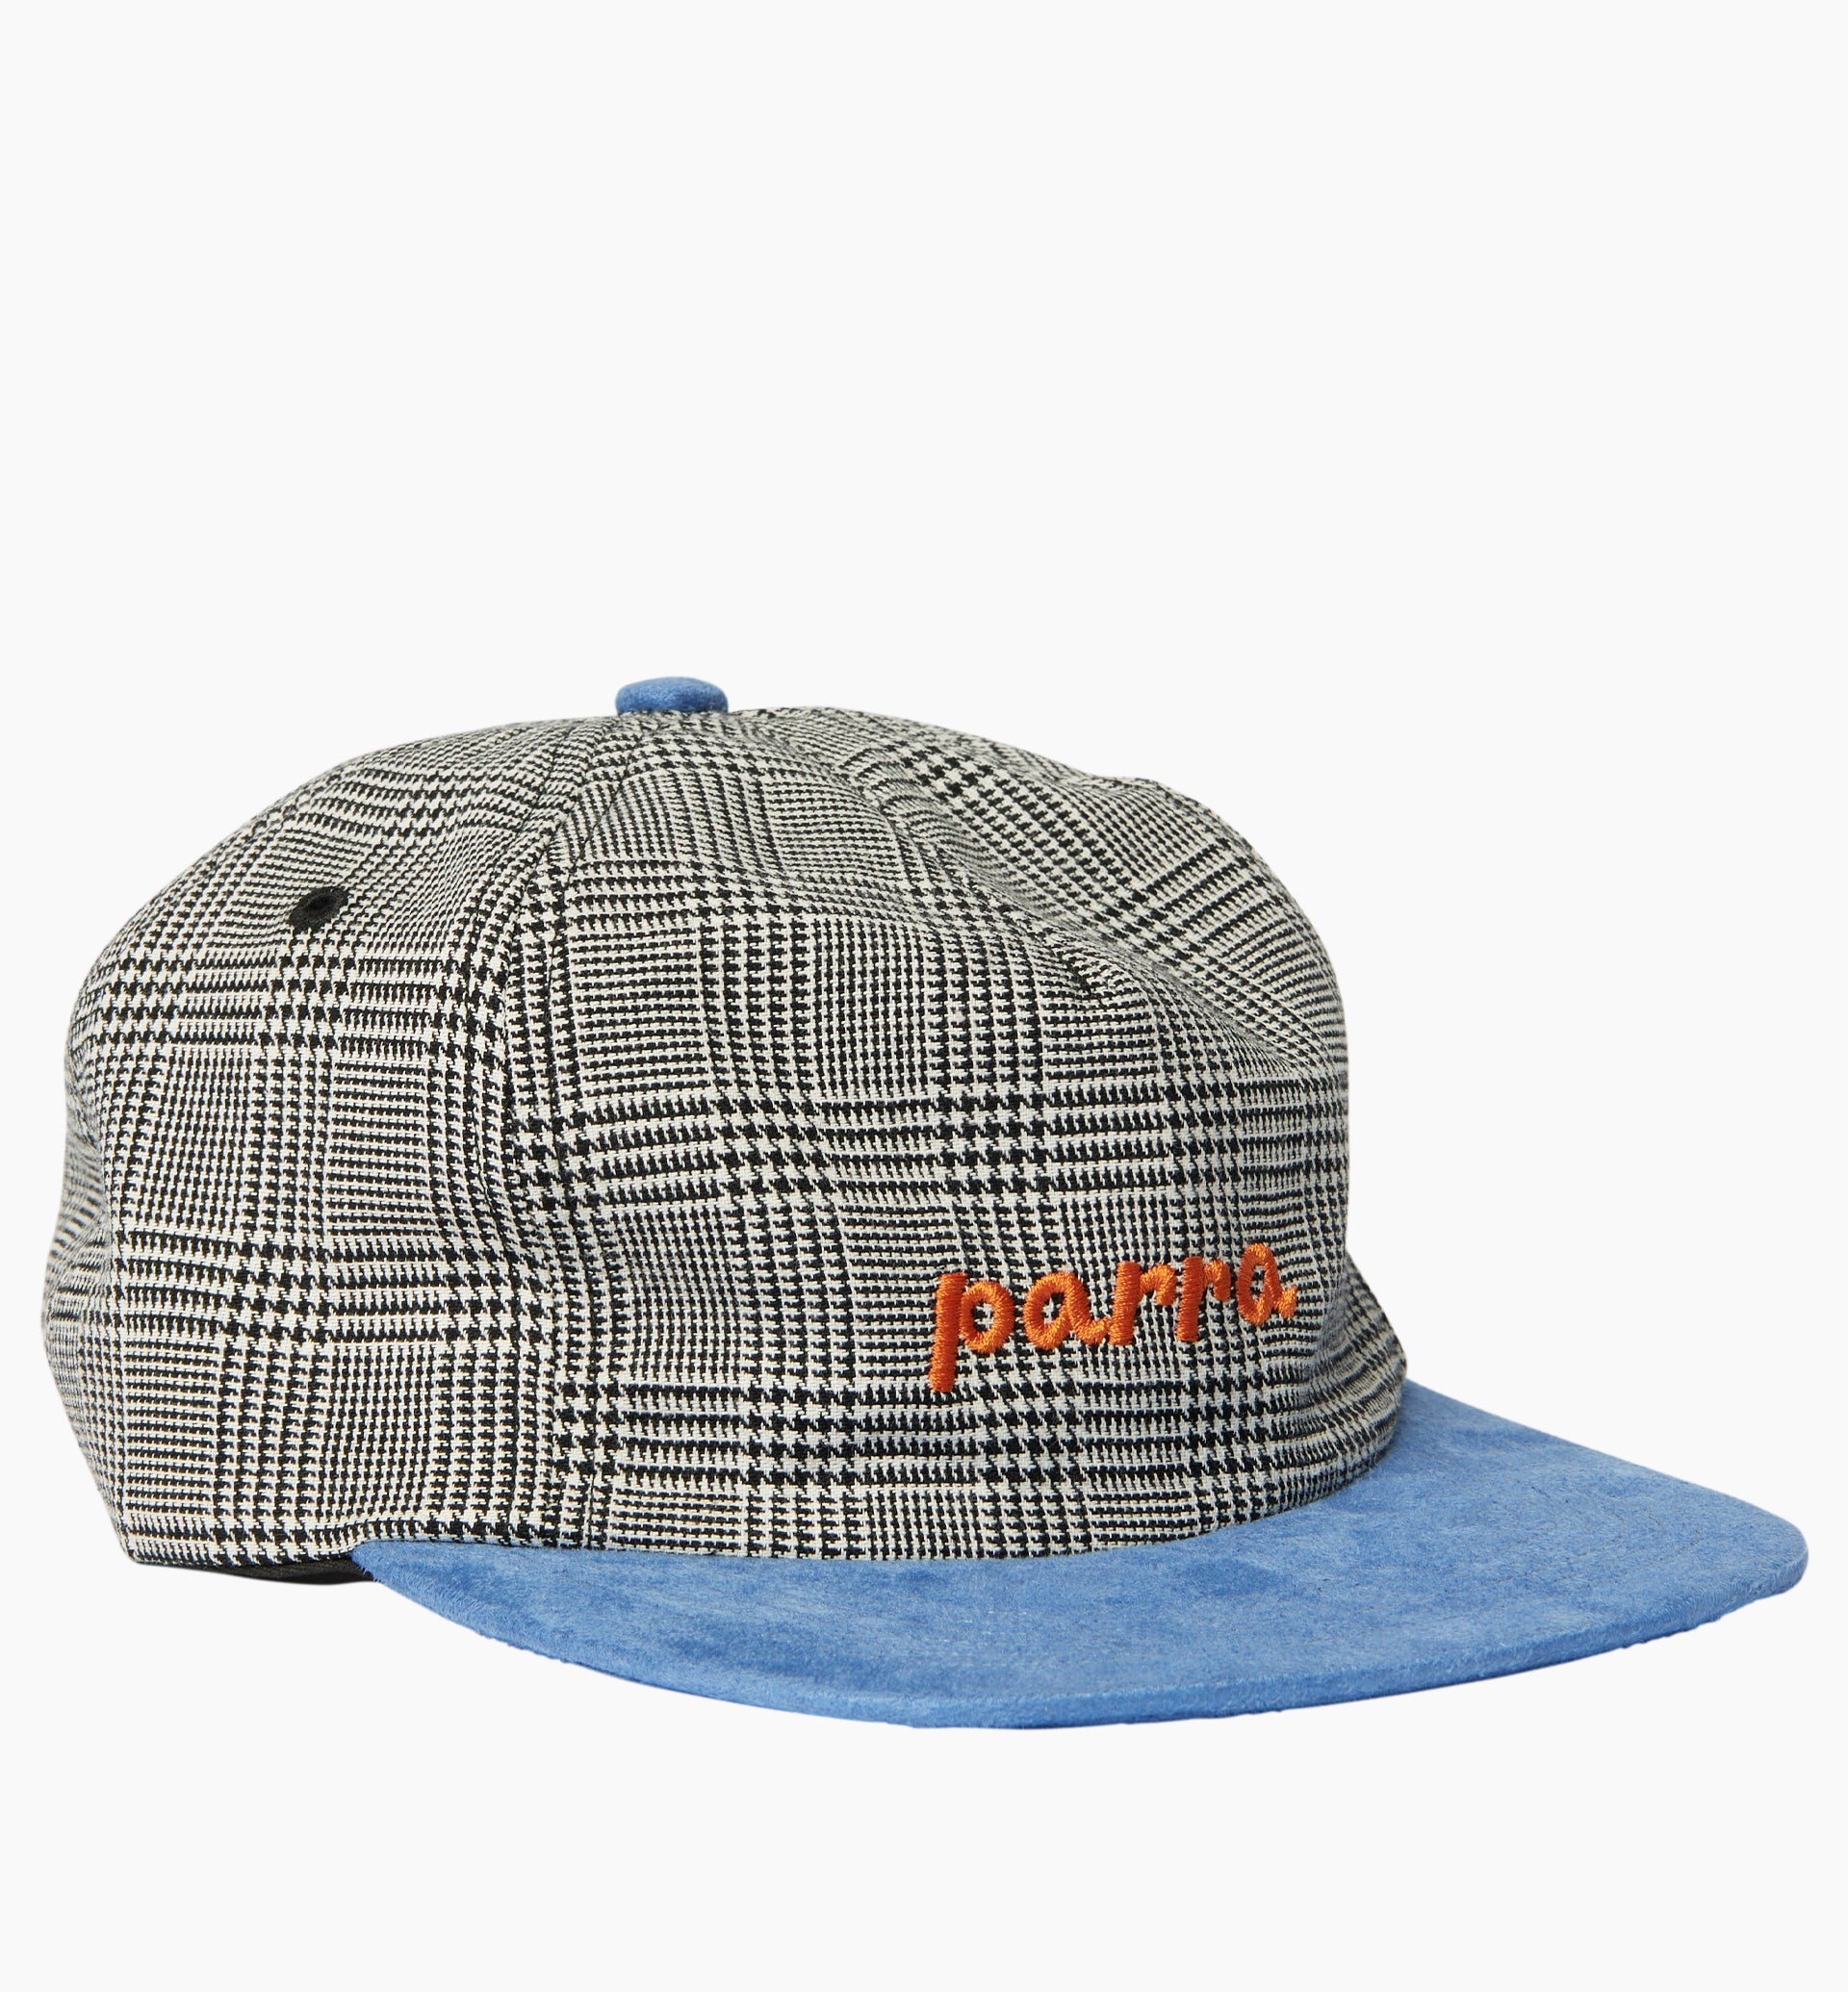 Parra - lowercase logo 5 panel hat